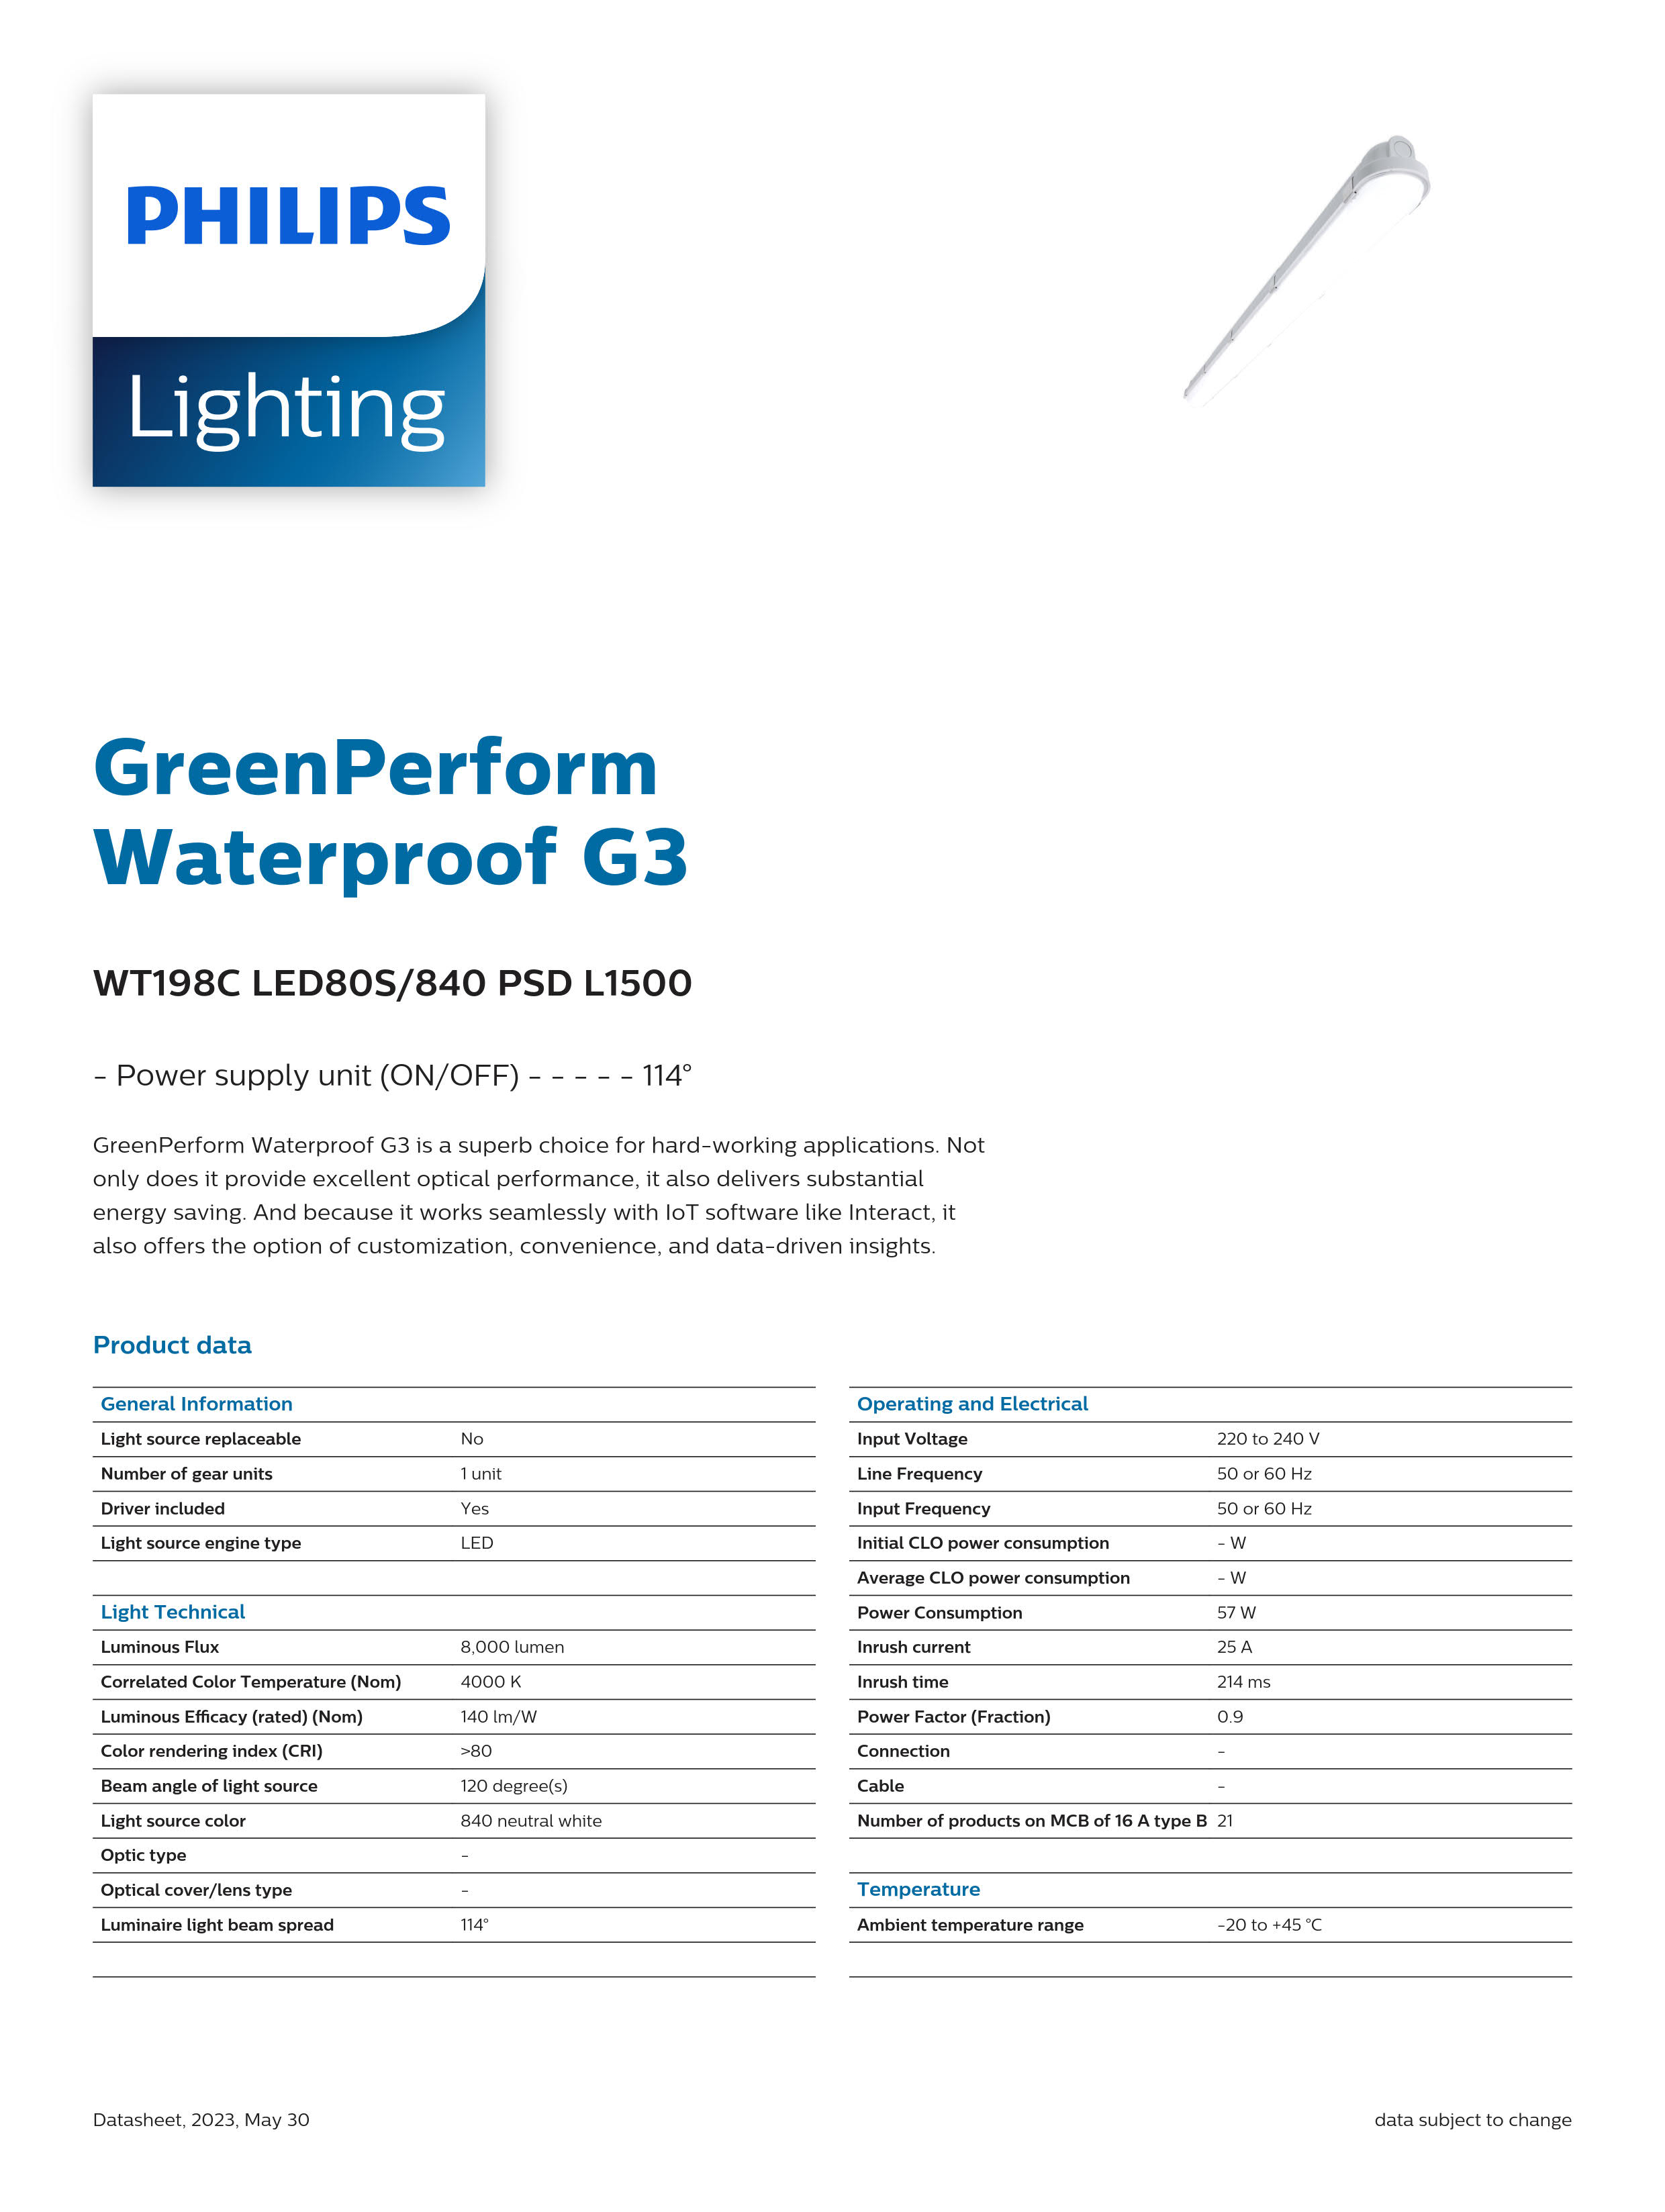 PHILIPS Waterproof WT198C LED80S/840 PSD L1500 911401563061